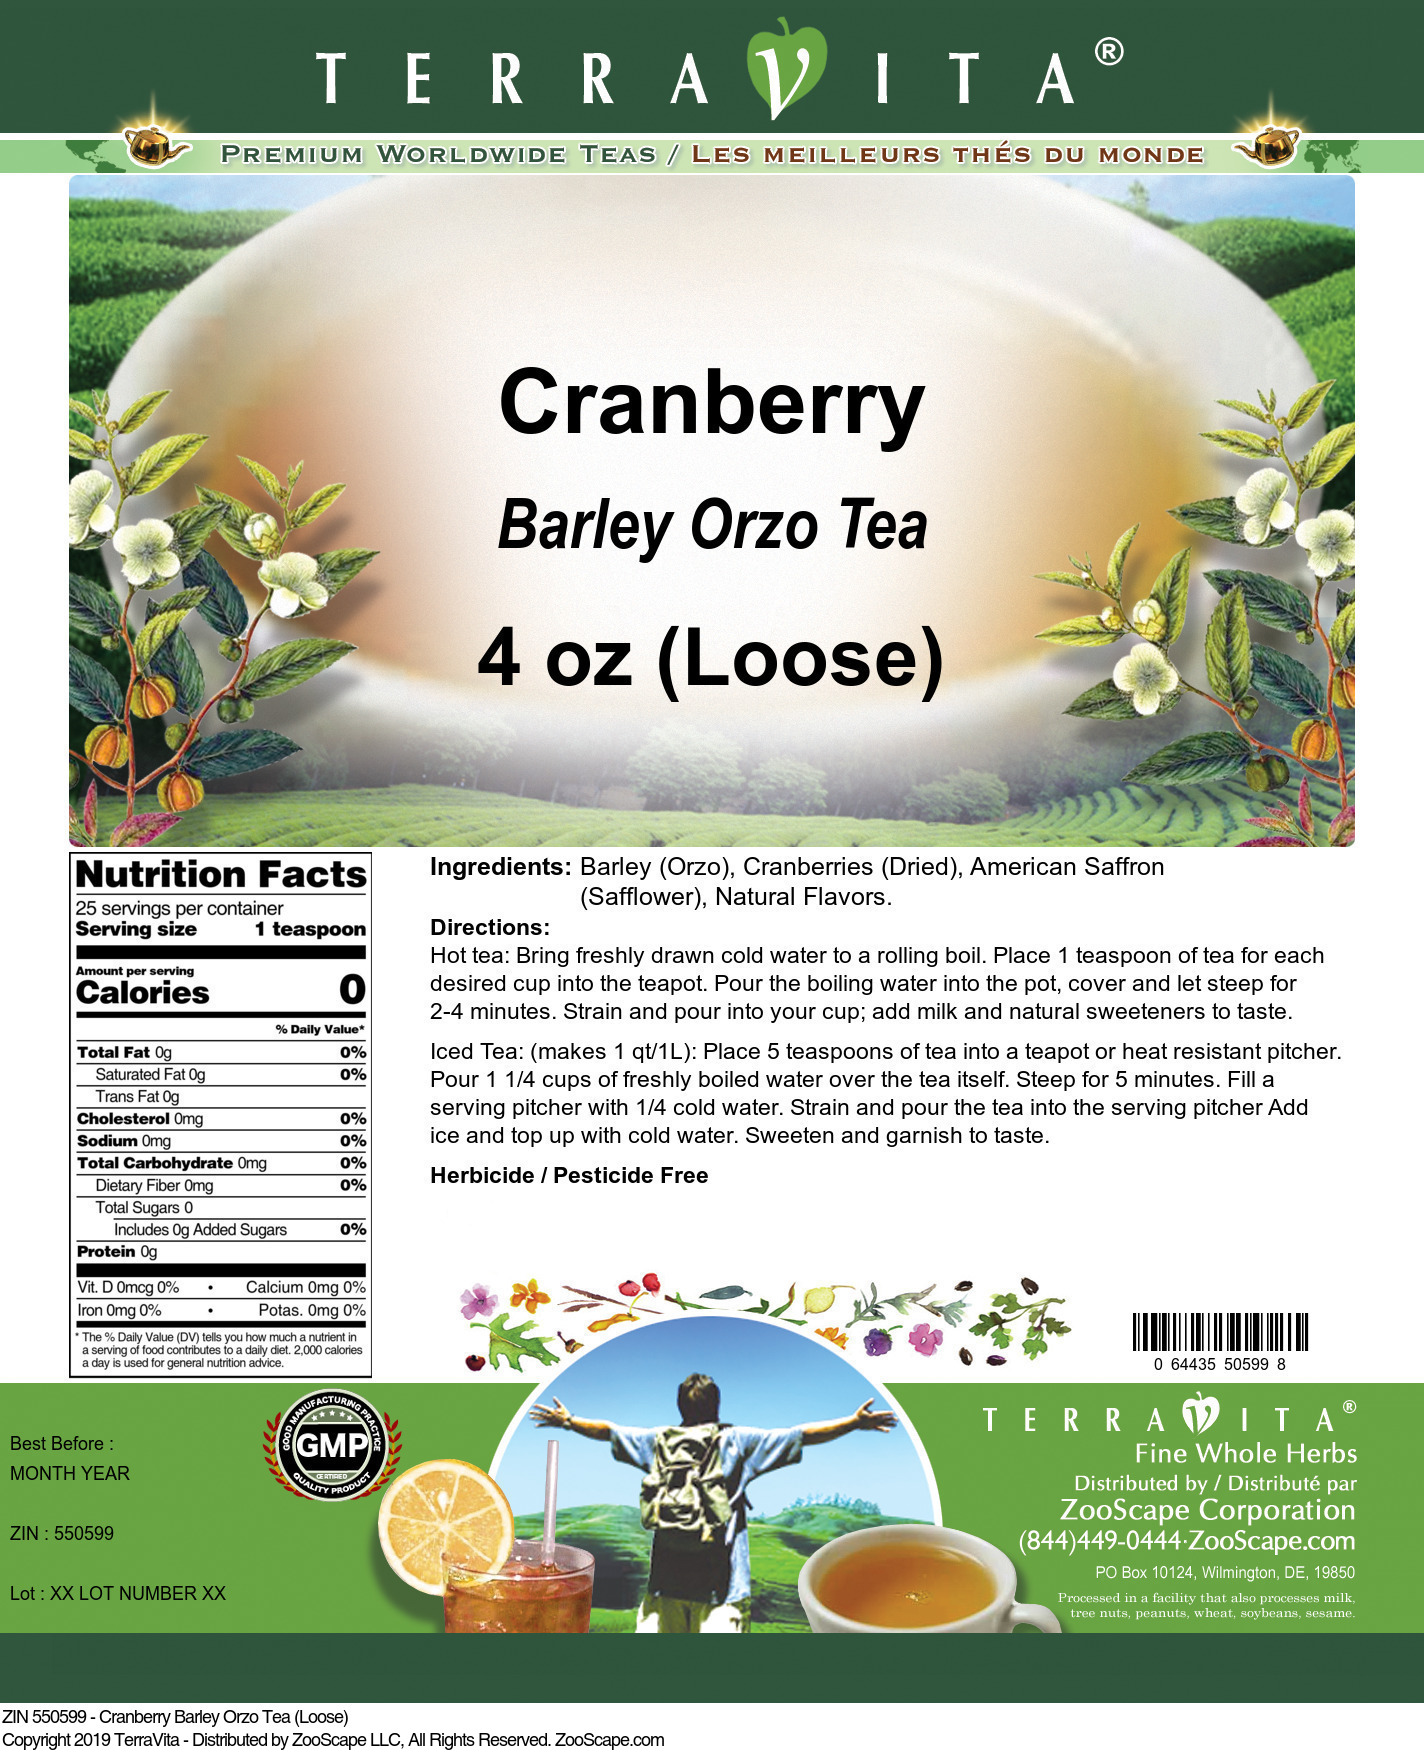 Cranberry Barley Orzo Tea (Loose) - Label